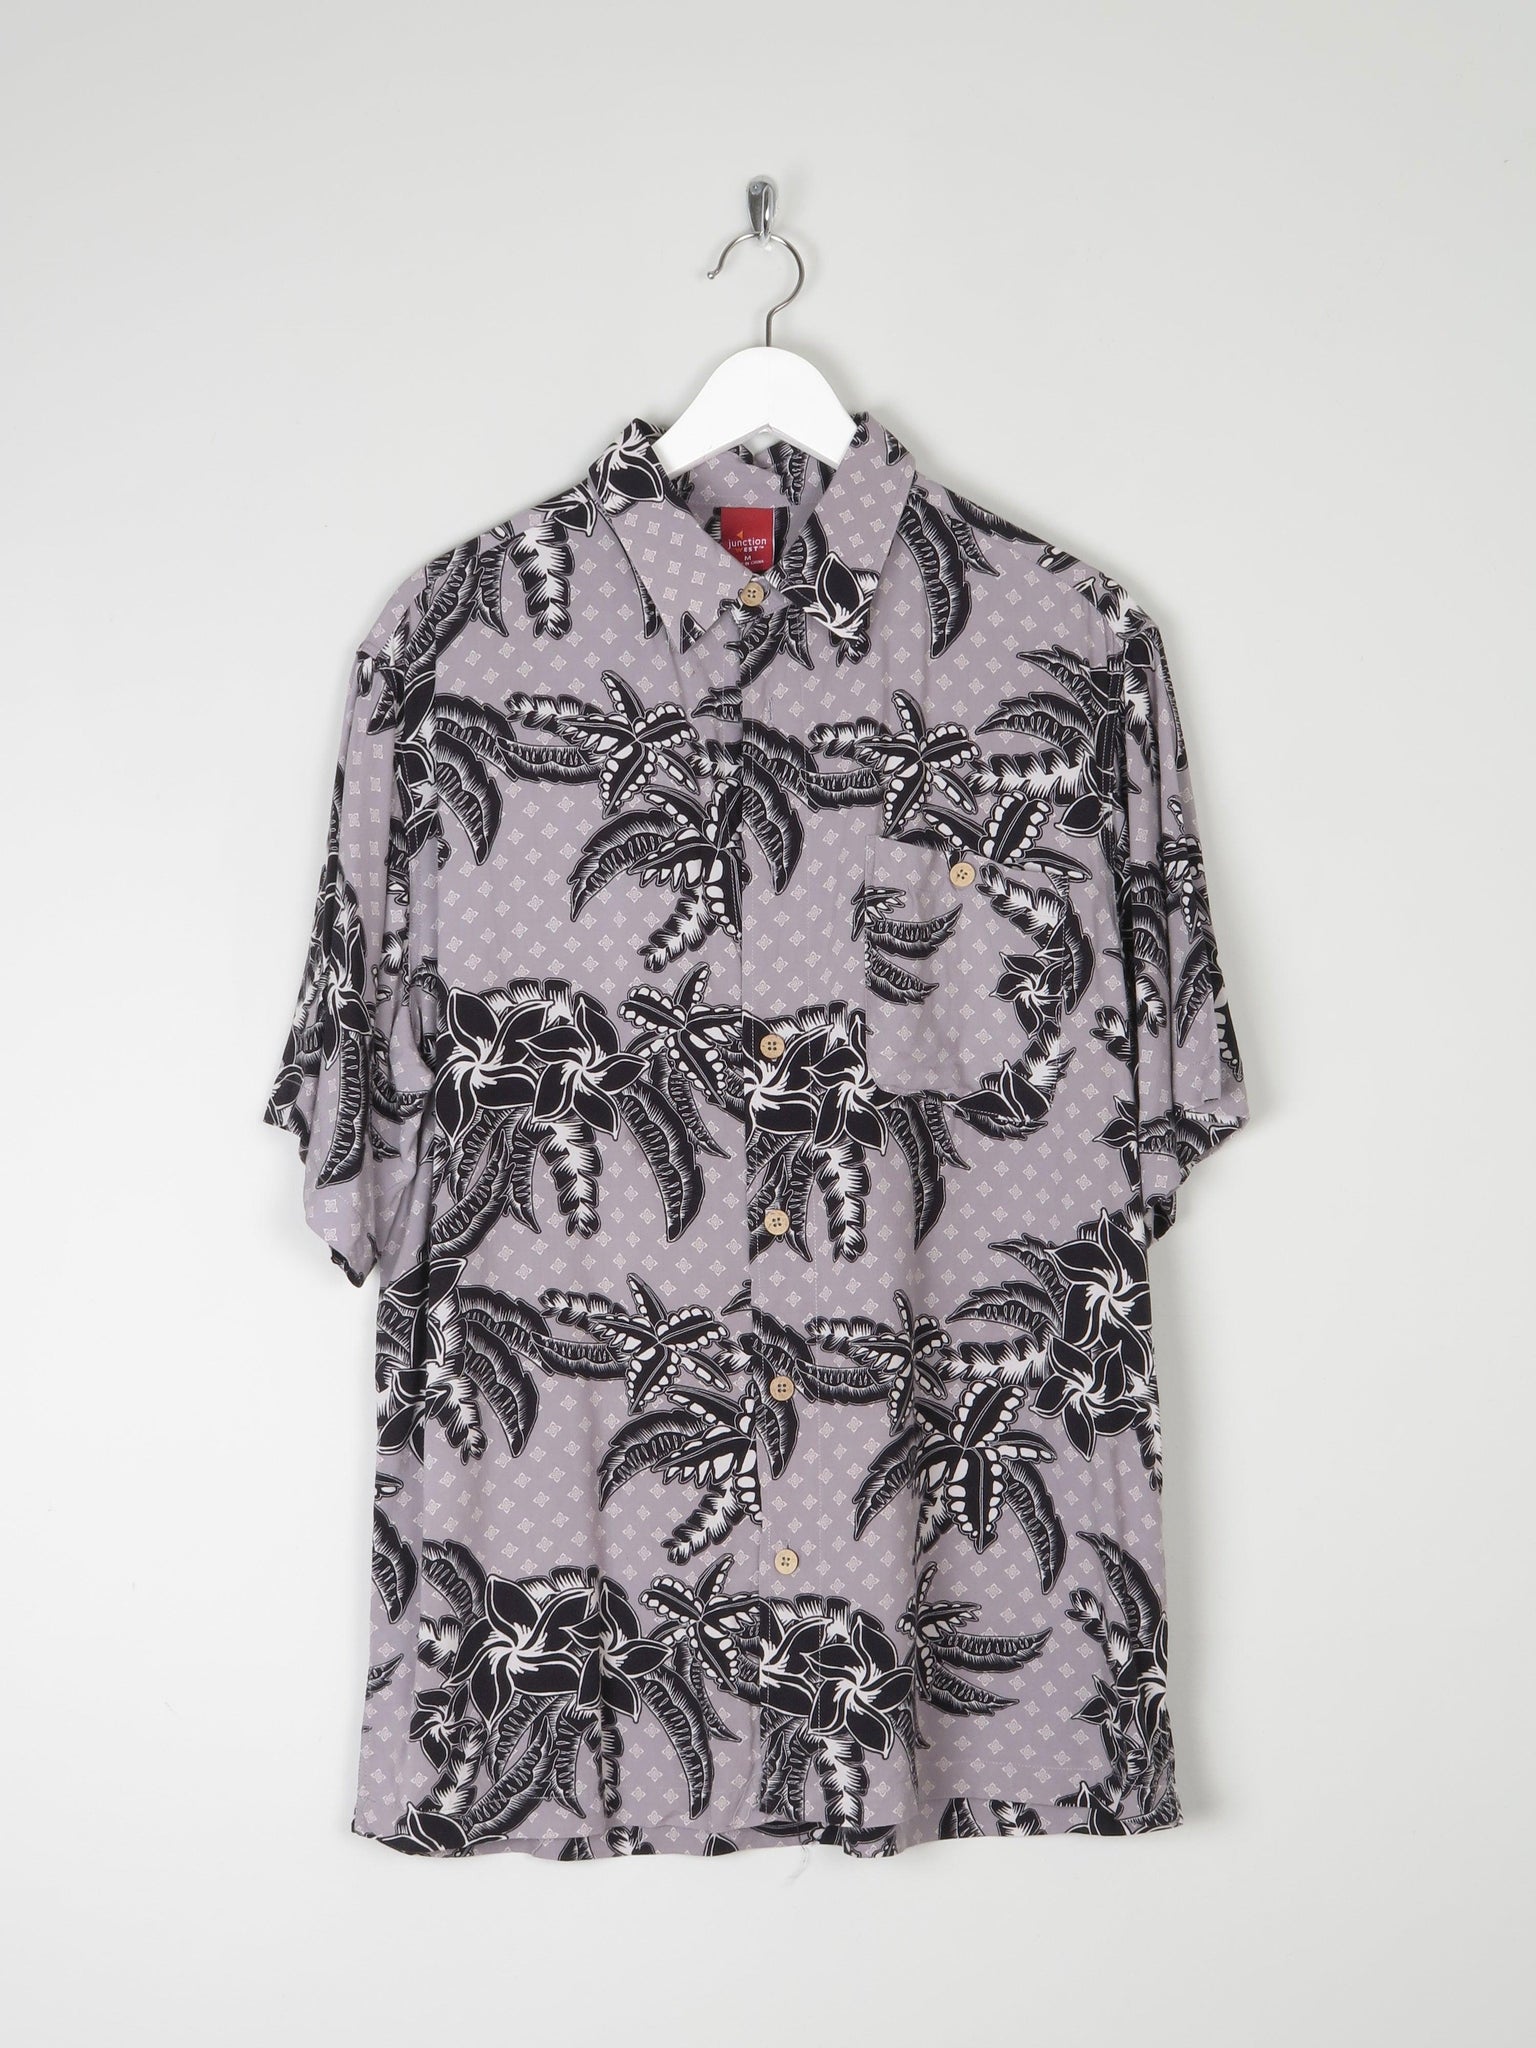 Men's Printed Hawaiian Style Shirt M - The Harlequin